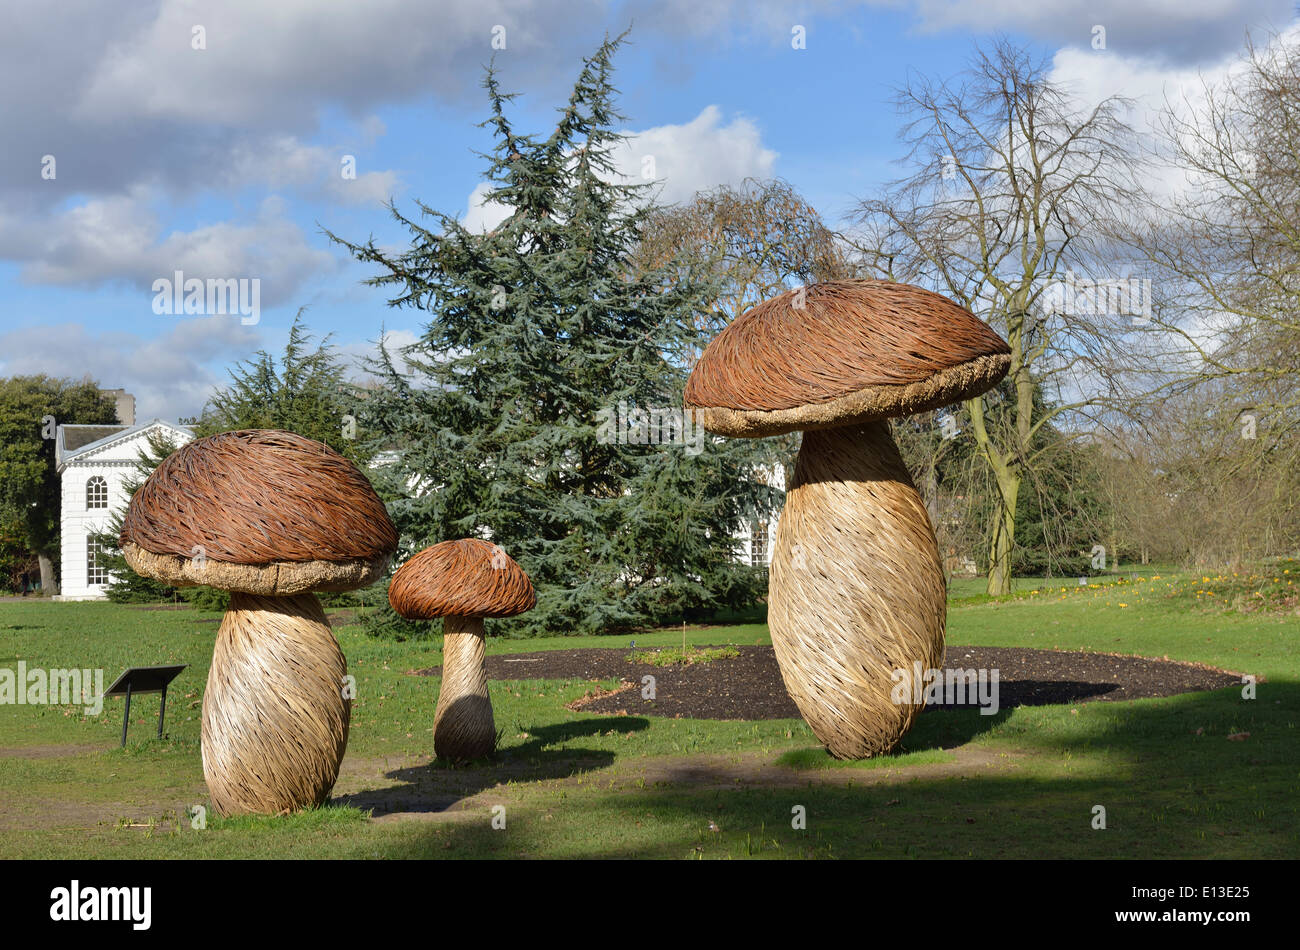 Giant mushroom sculptures by Tom Hare, Royal Botanic Gardens, Kew, London,  UK Stock Photo - Alamy